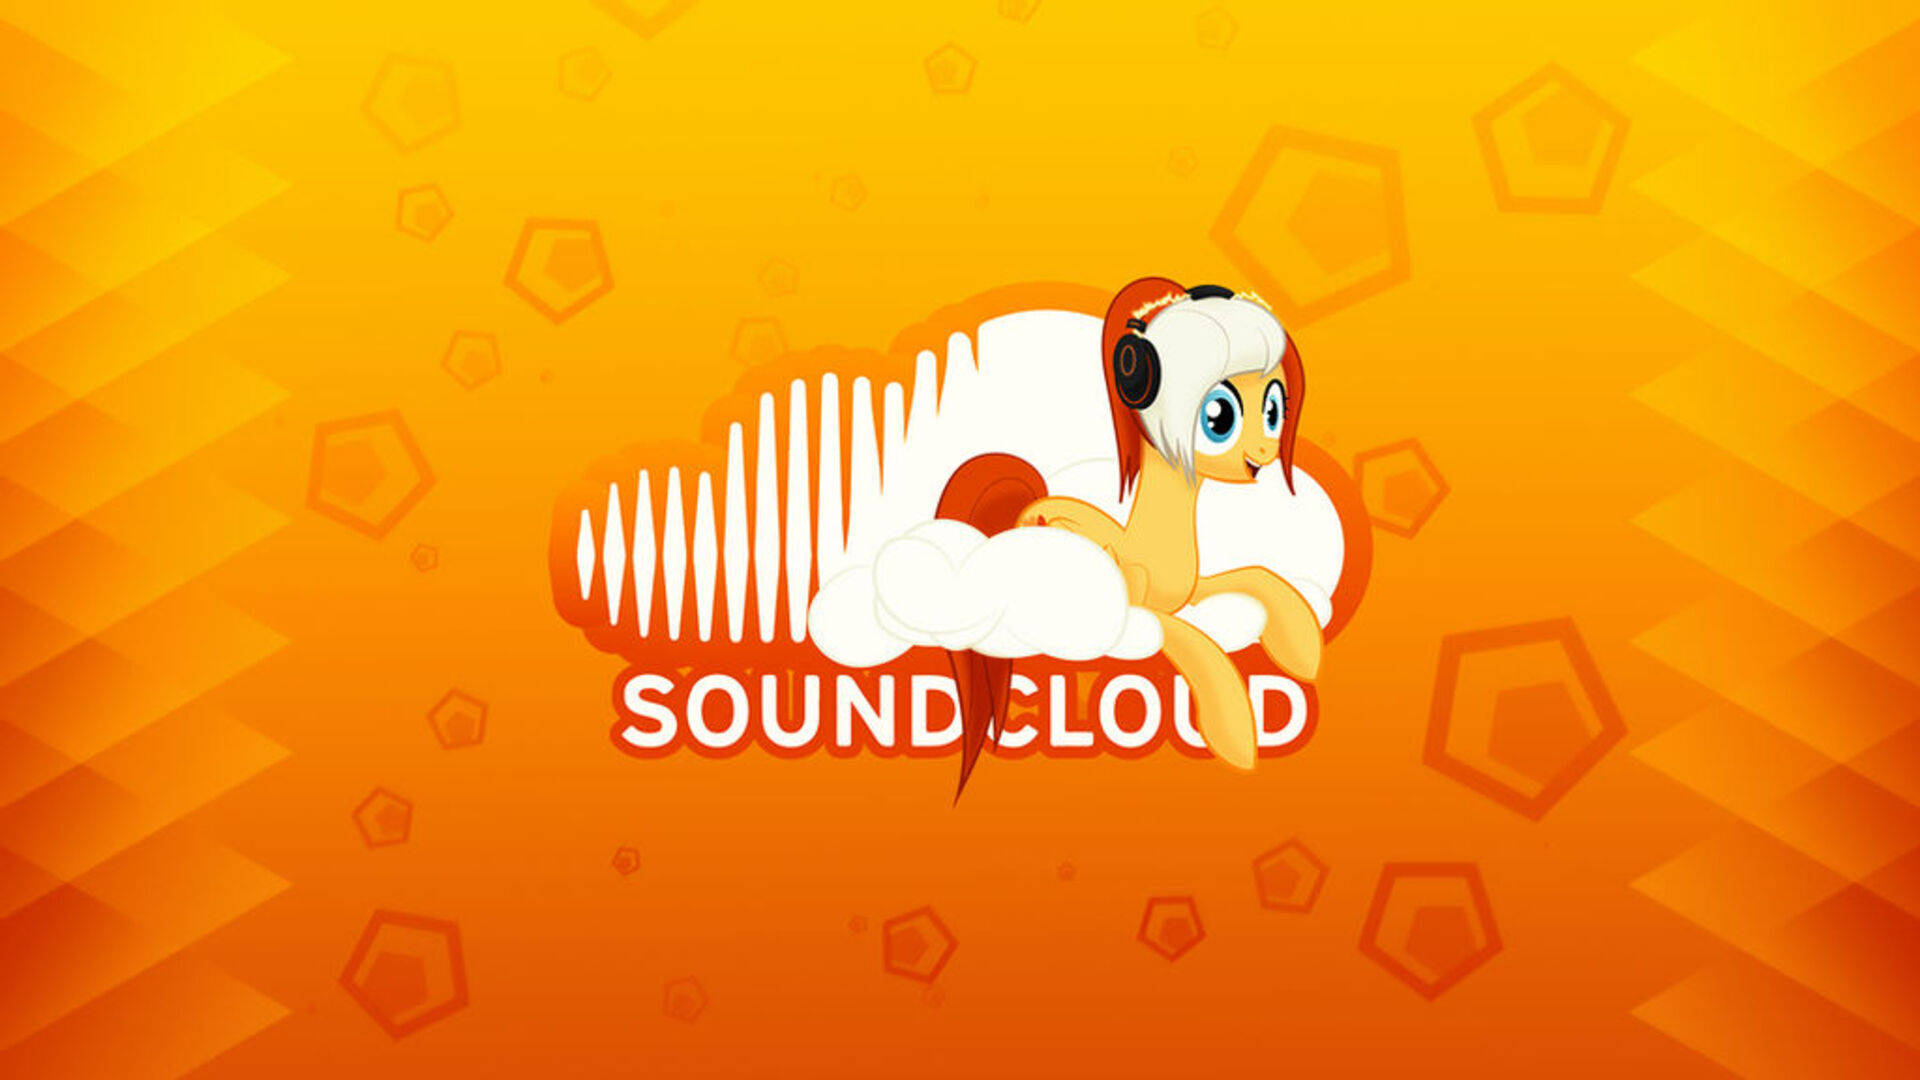 SoundCloud music pony art wallpaper